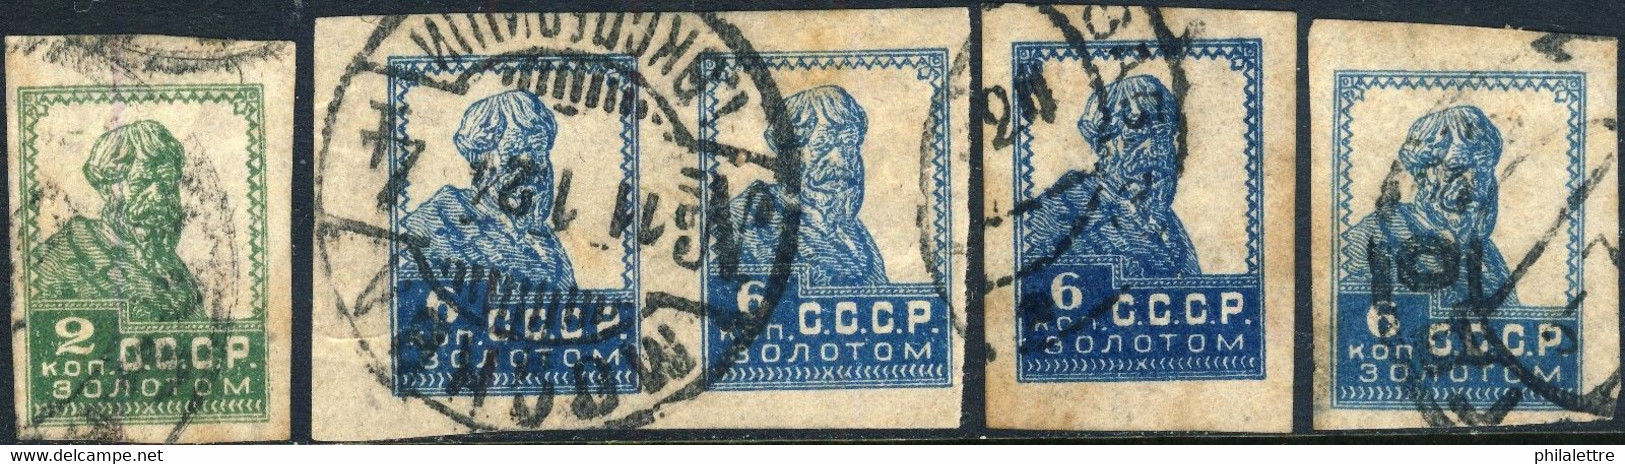 URSS / USSR - Soviet Union - 1923/4 - Mi.229.1 & 4xMi.233.I Imperf / No Wmk - VFU - Gebraucht